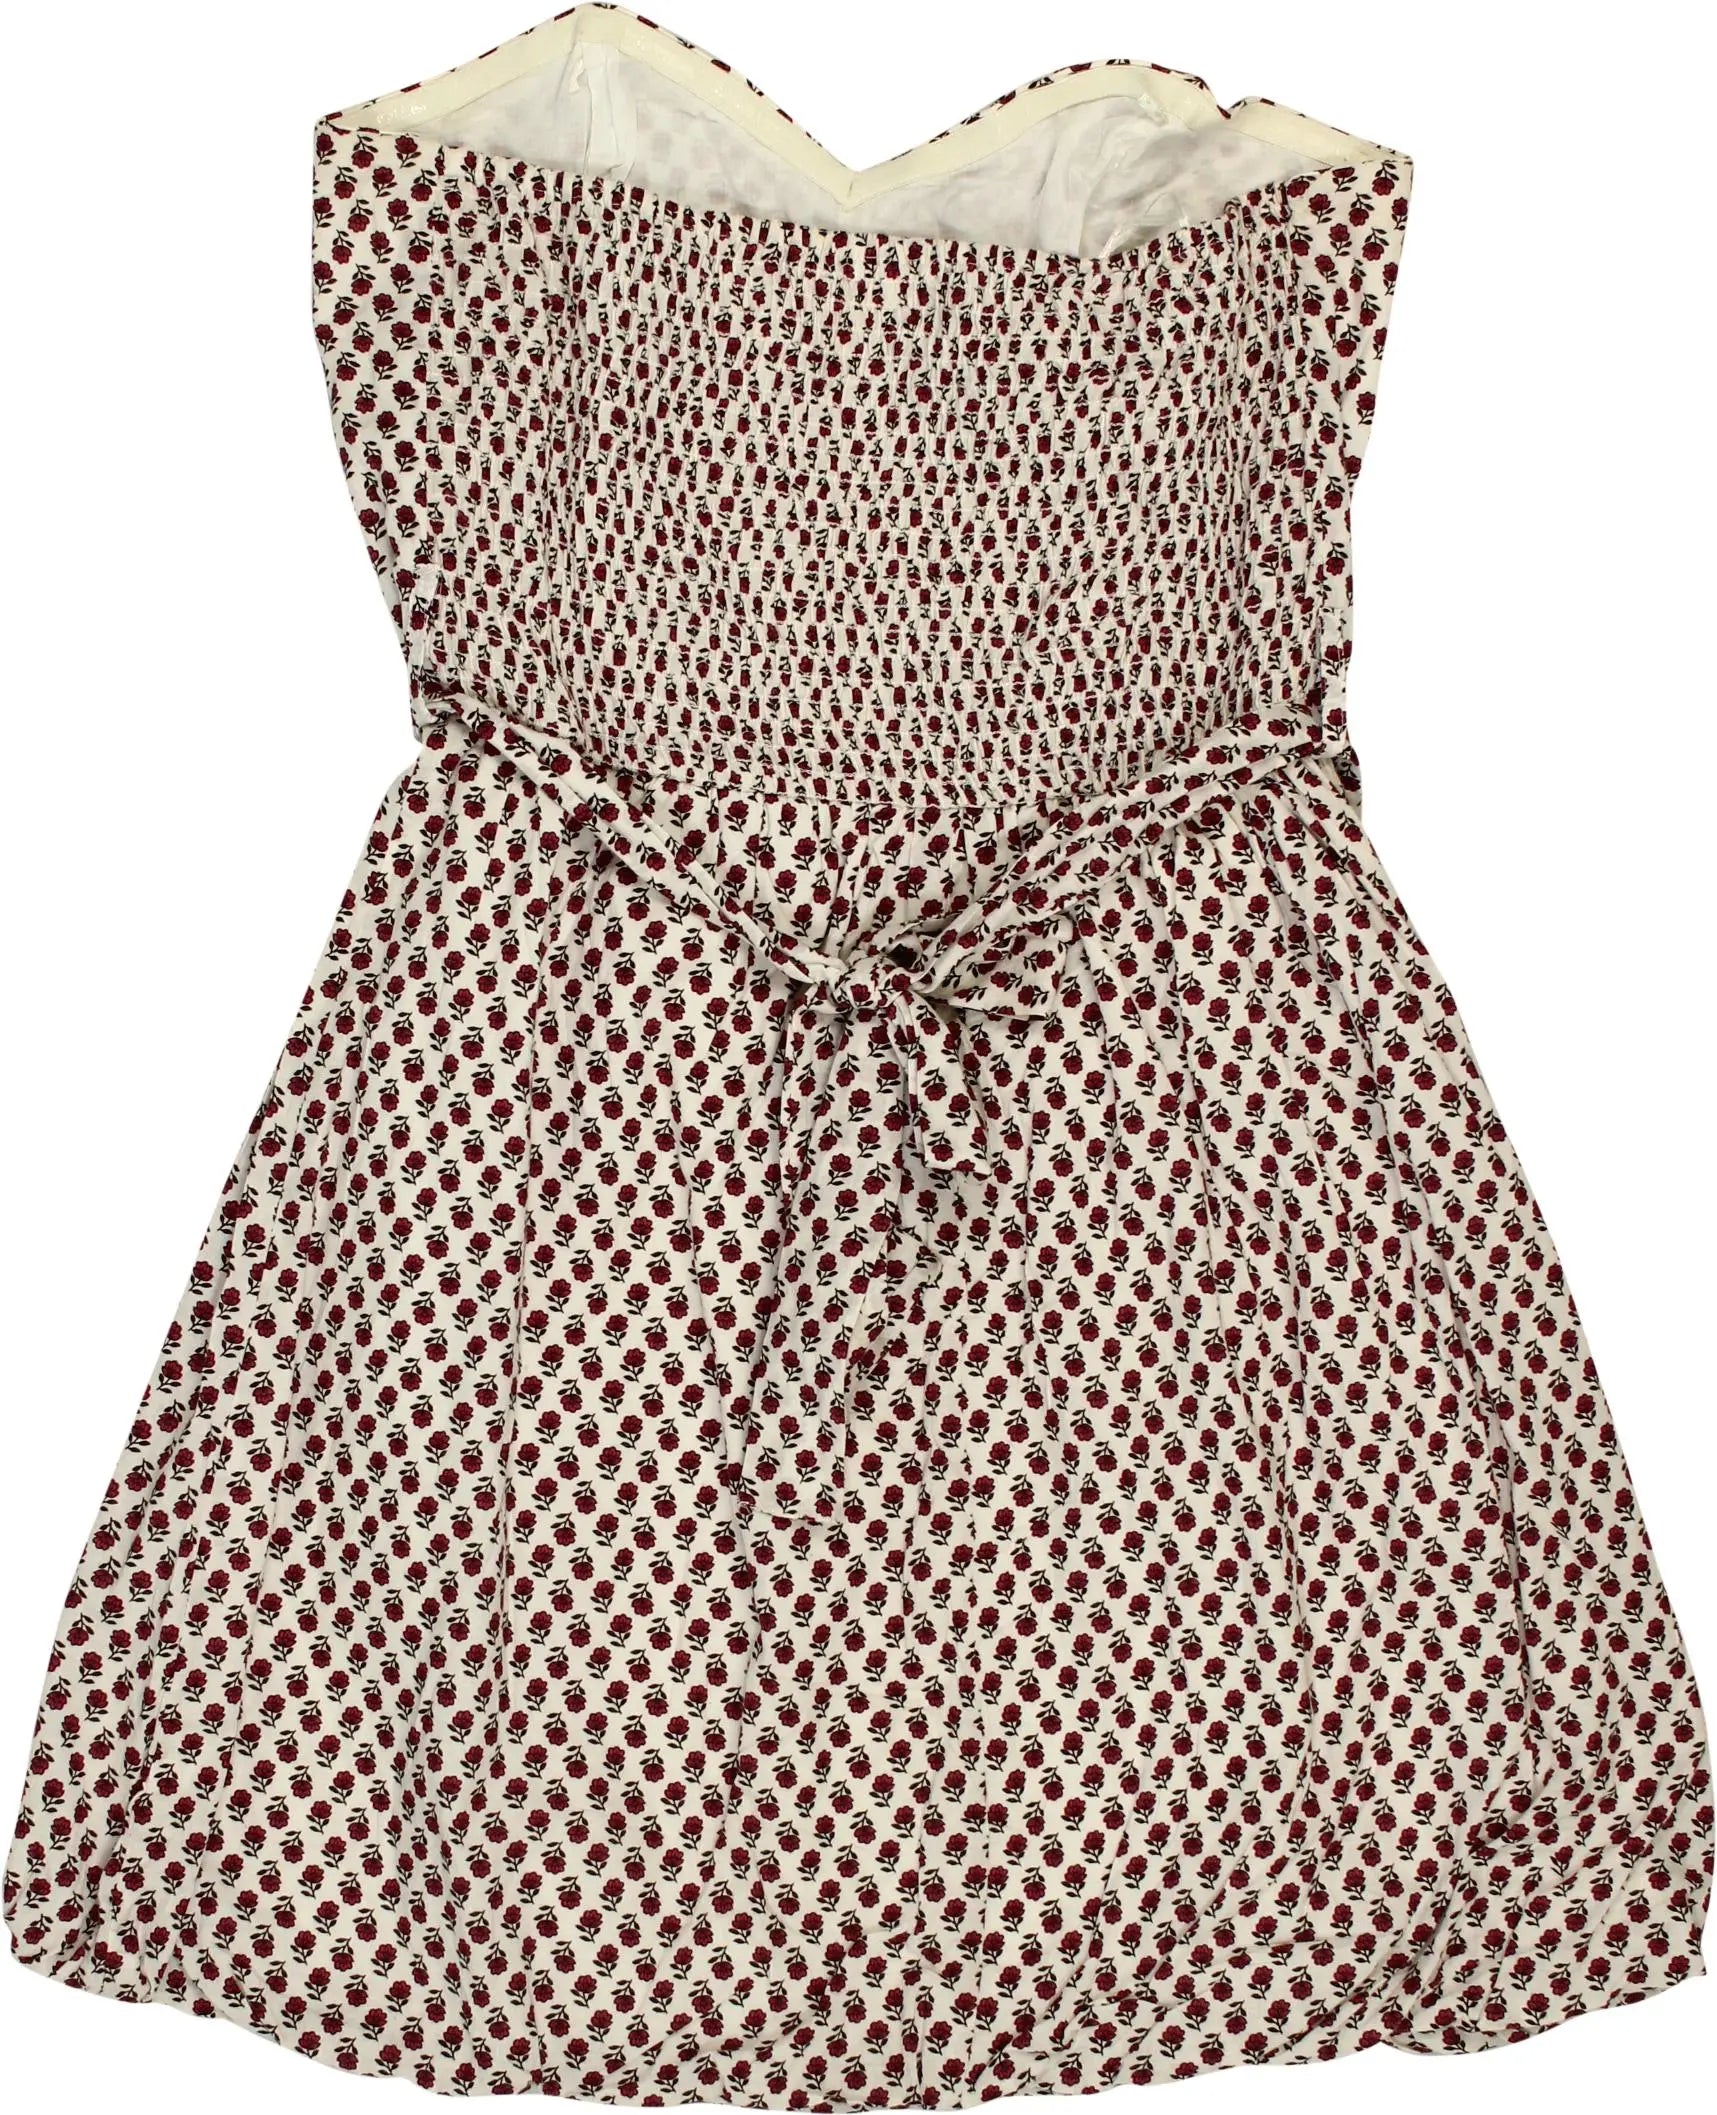 Xhilaration - Floral Dress- ThriftTale.com - Vintage and second handclothing